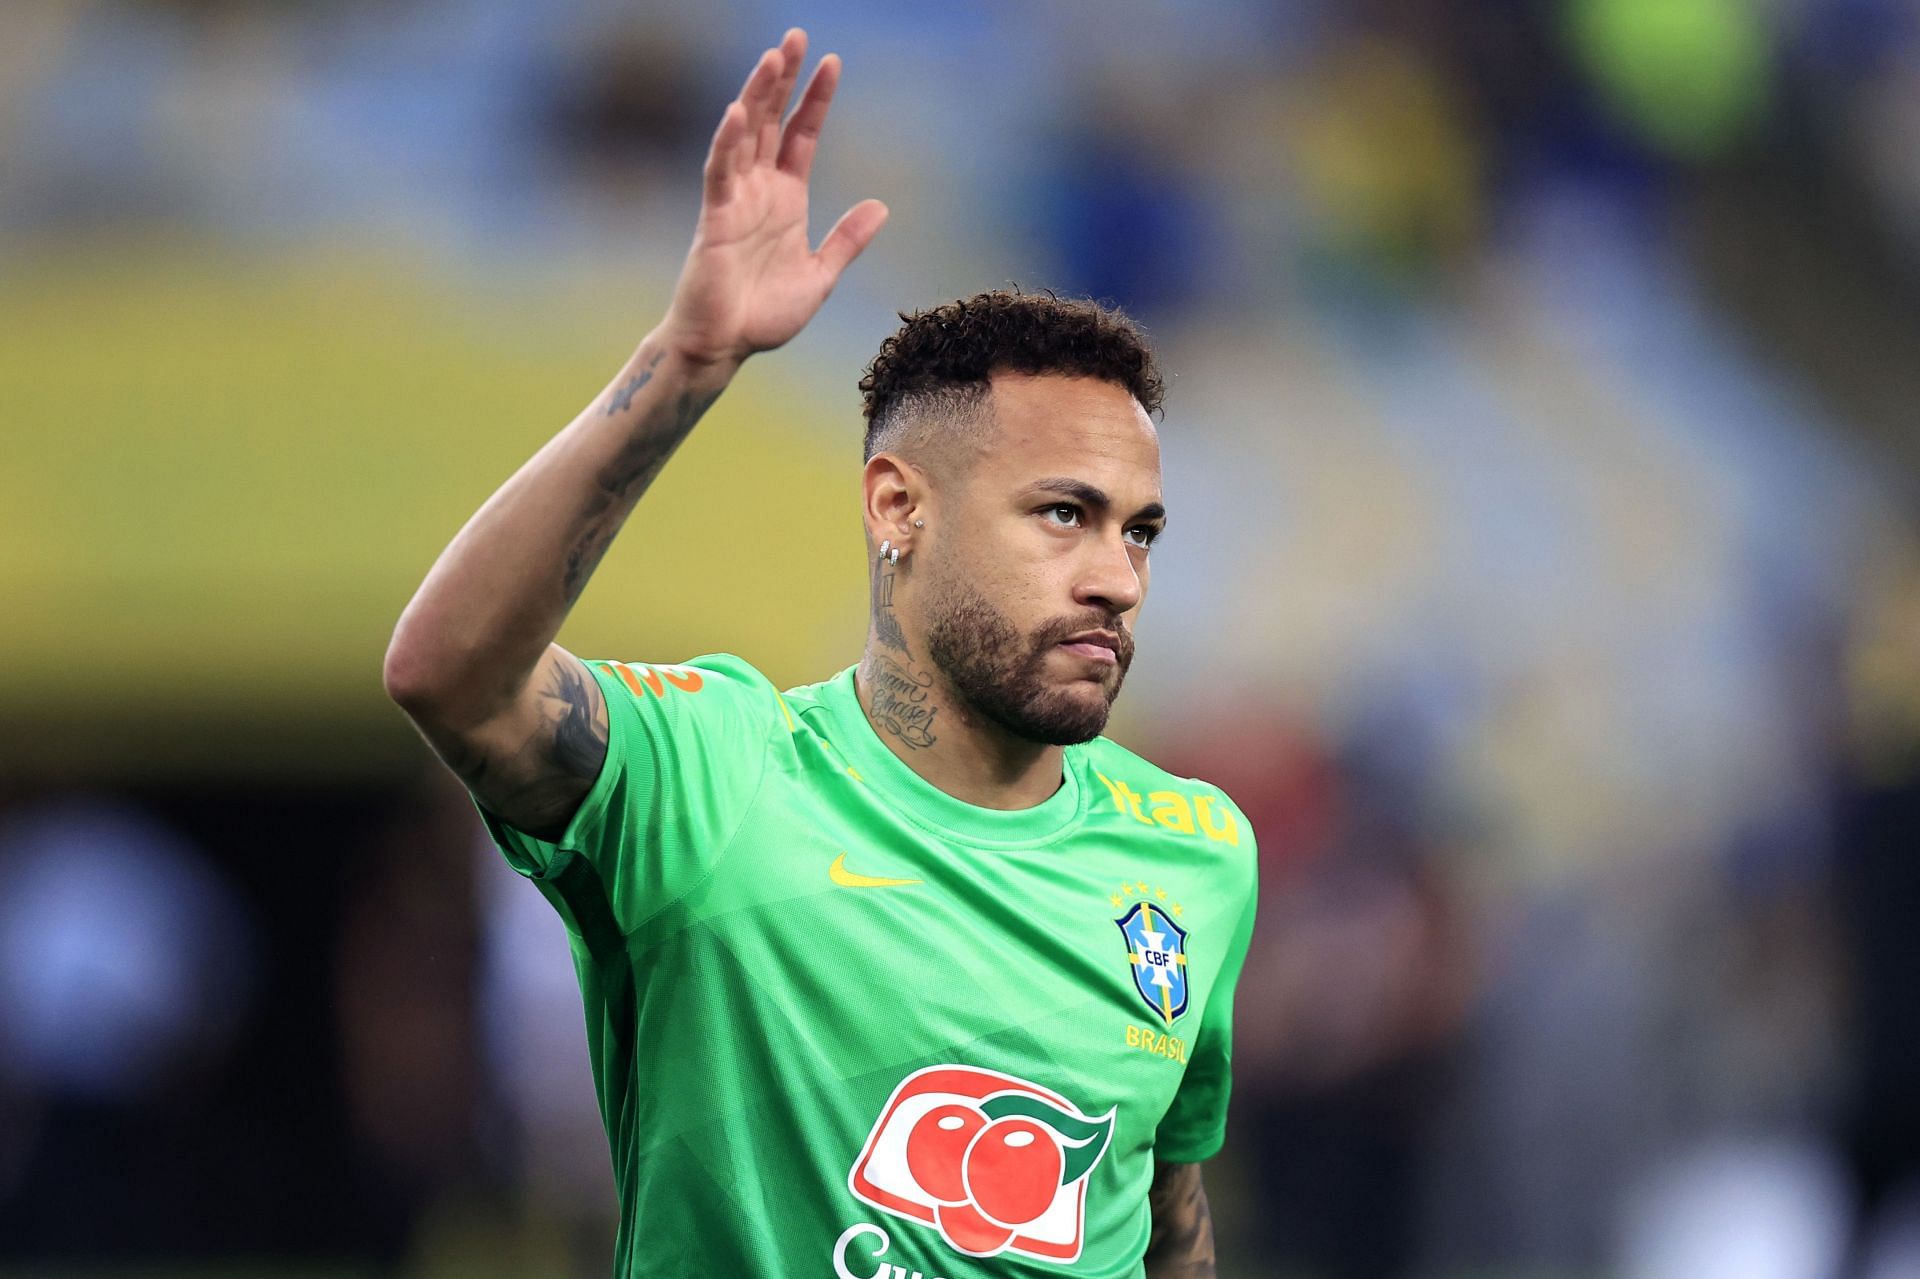 Neymar has endured a difficult season so far.